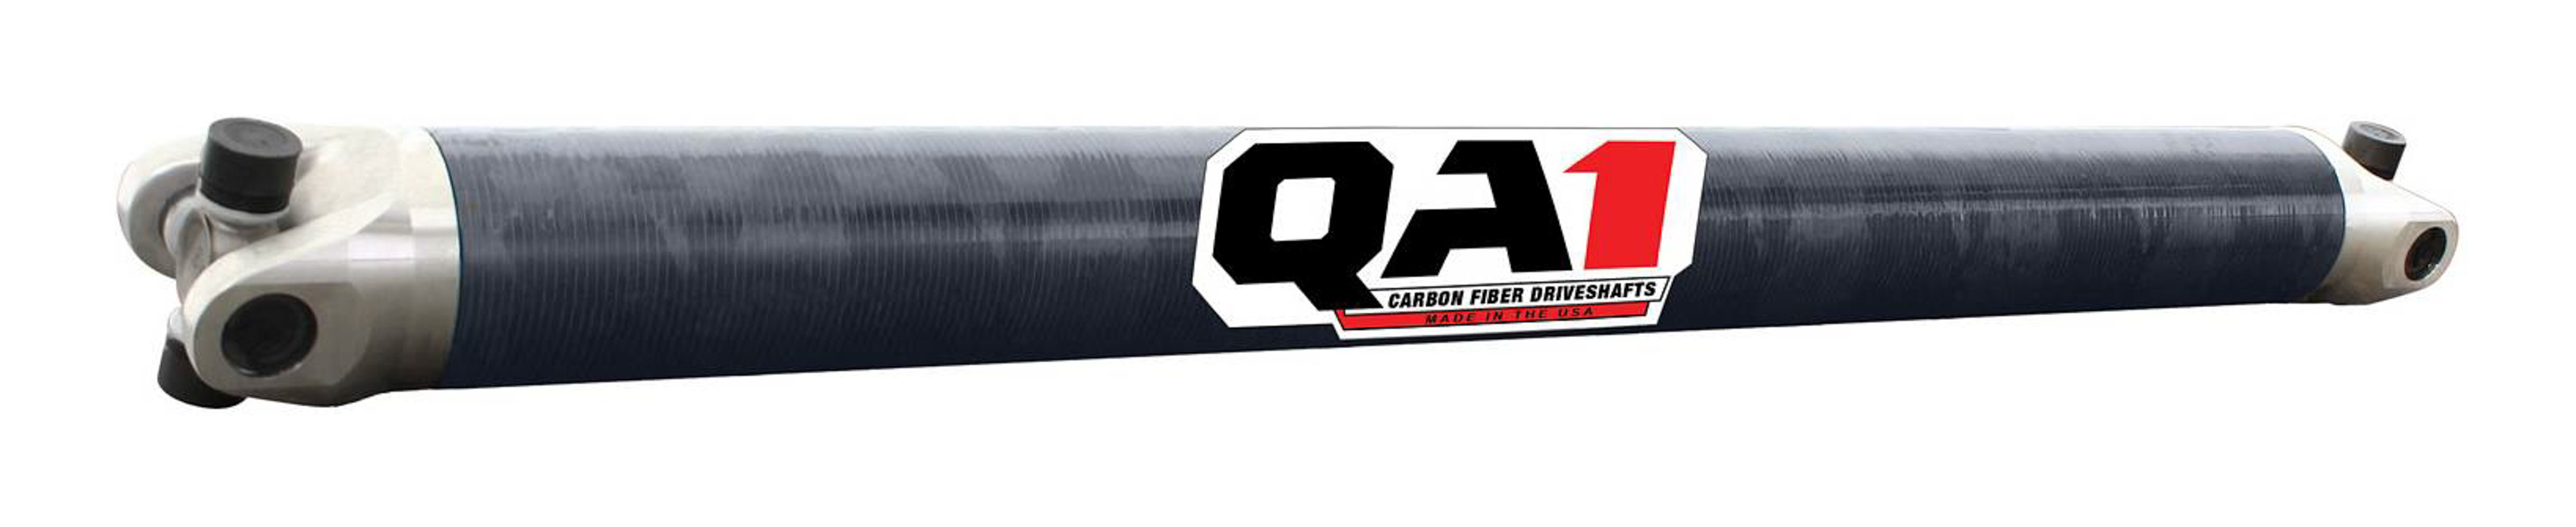 QA1 JJ-11230 Drive Shaft, 35.500 in Long, 3.20 in OD, 1310 U-Joints, Carbon Fiber, Universal, Each